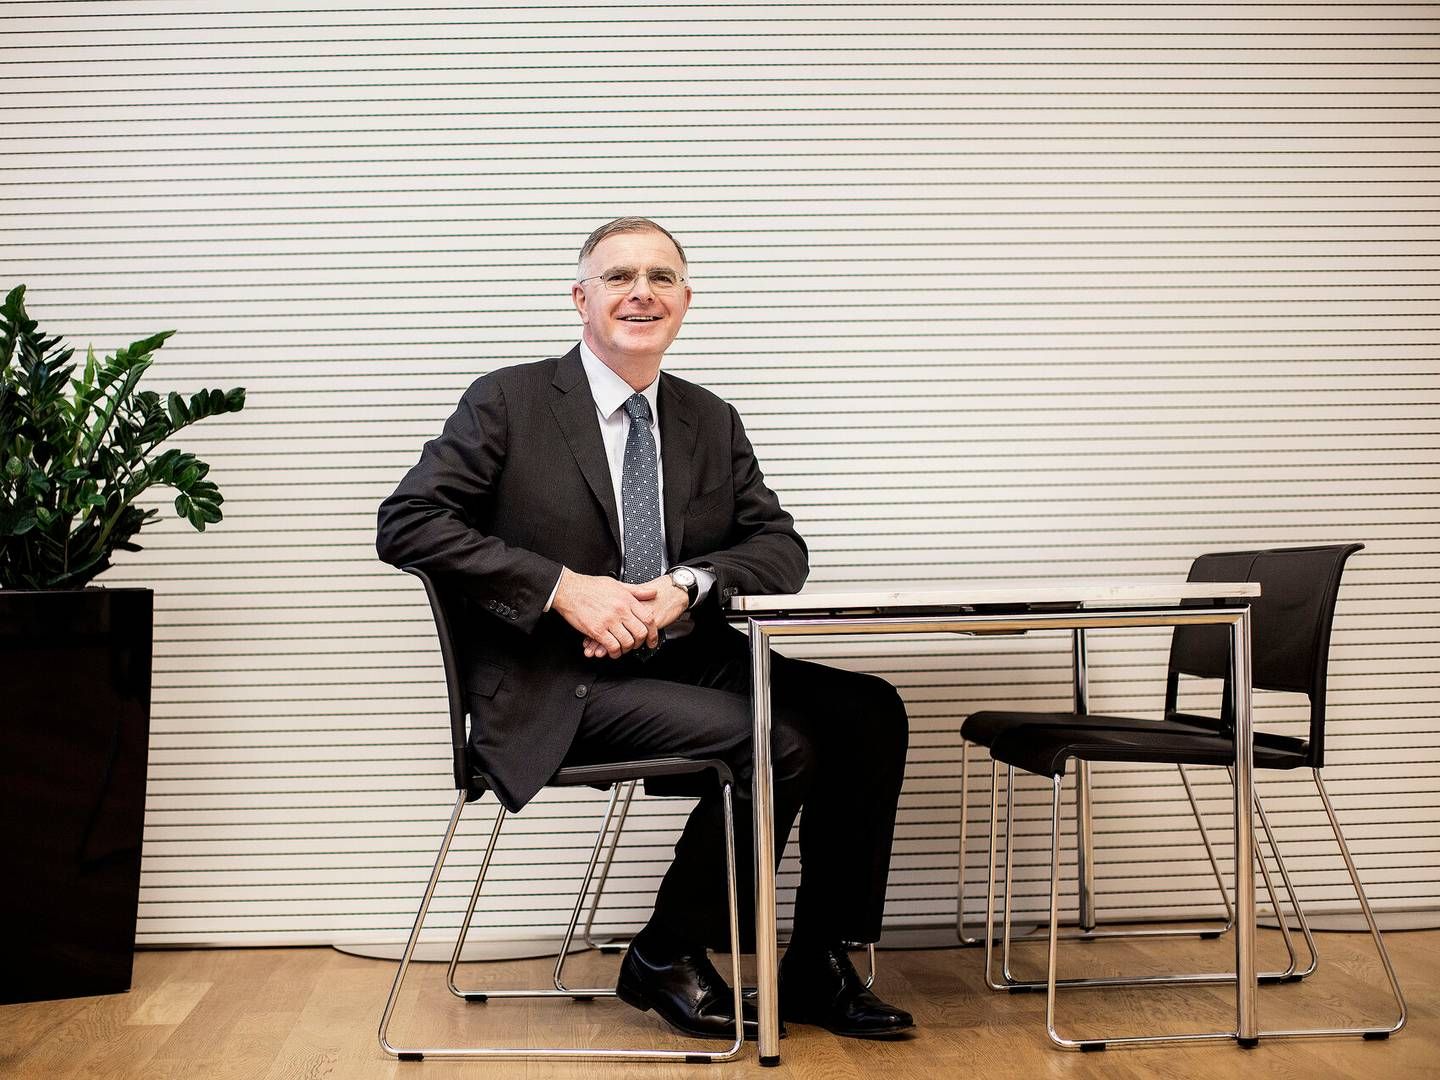 Jan van de Winkel er medstifter og adm. direktør i Genmab. | Foto: Bidstrup Stine/Ritzau Scanpix